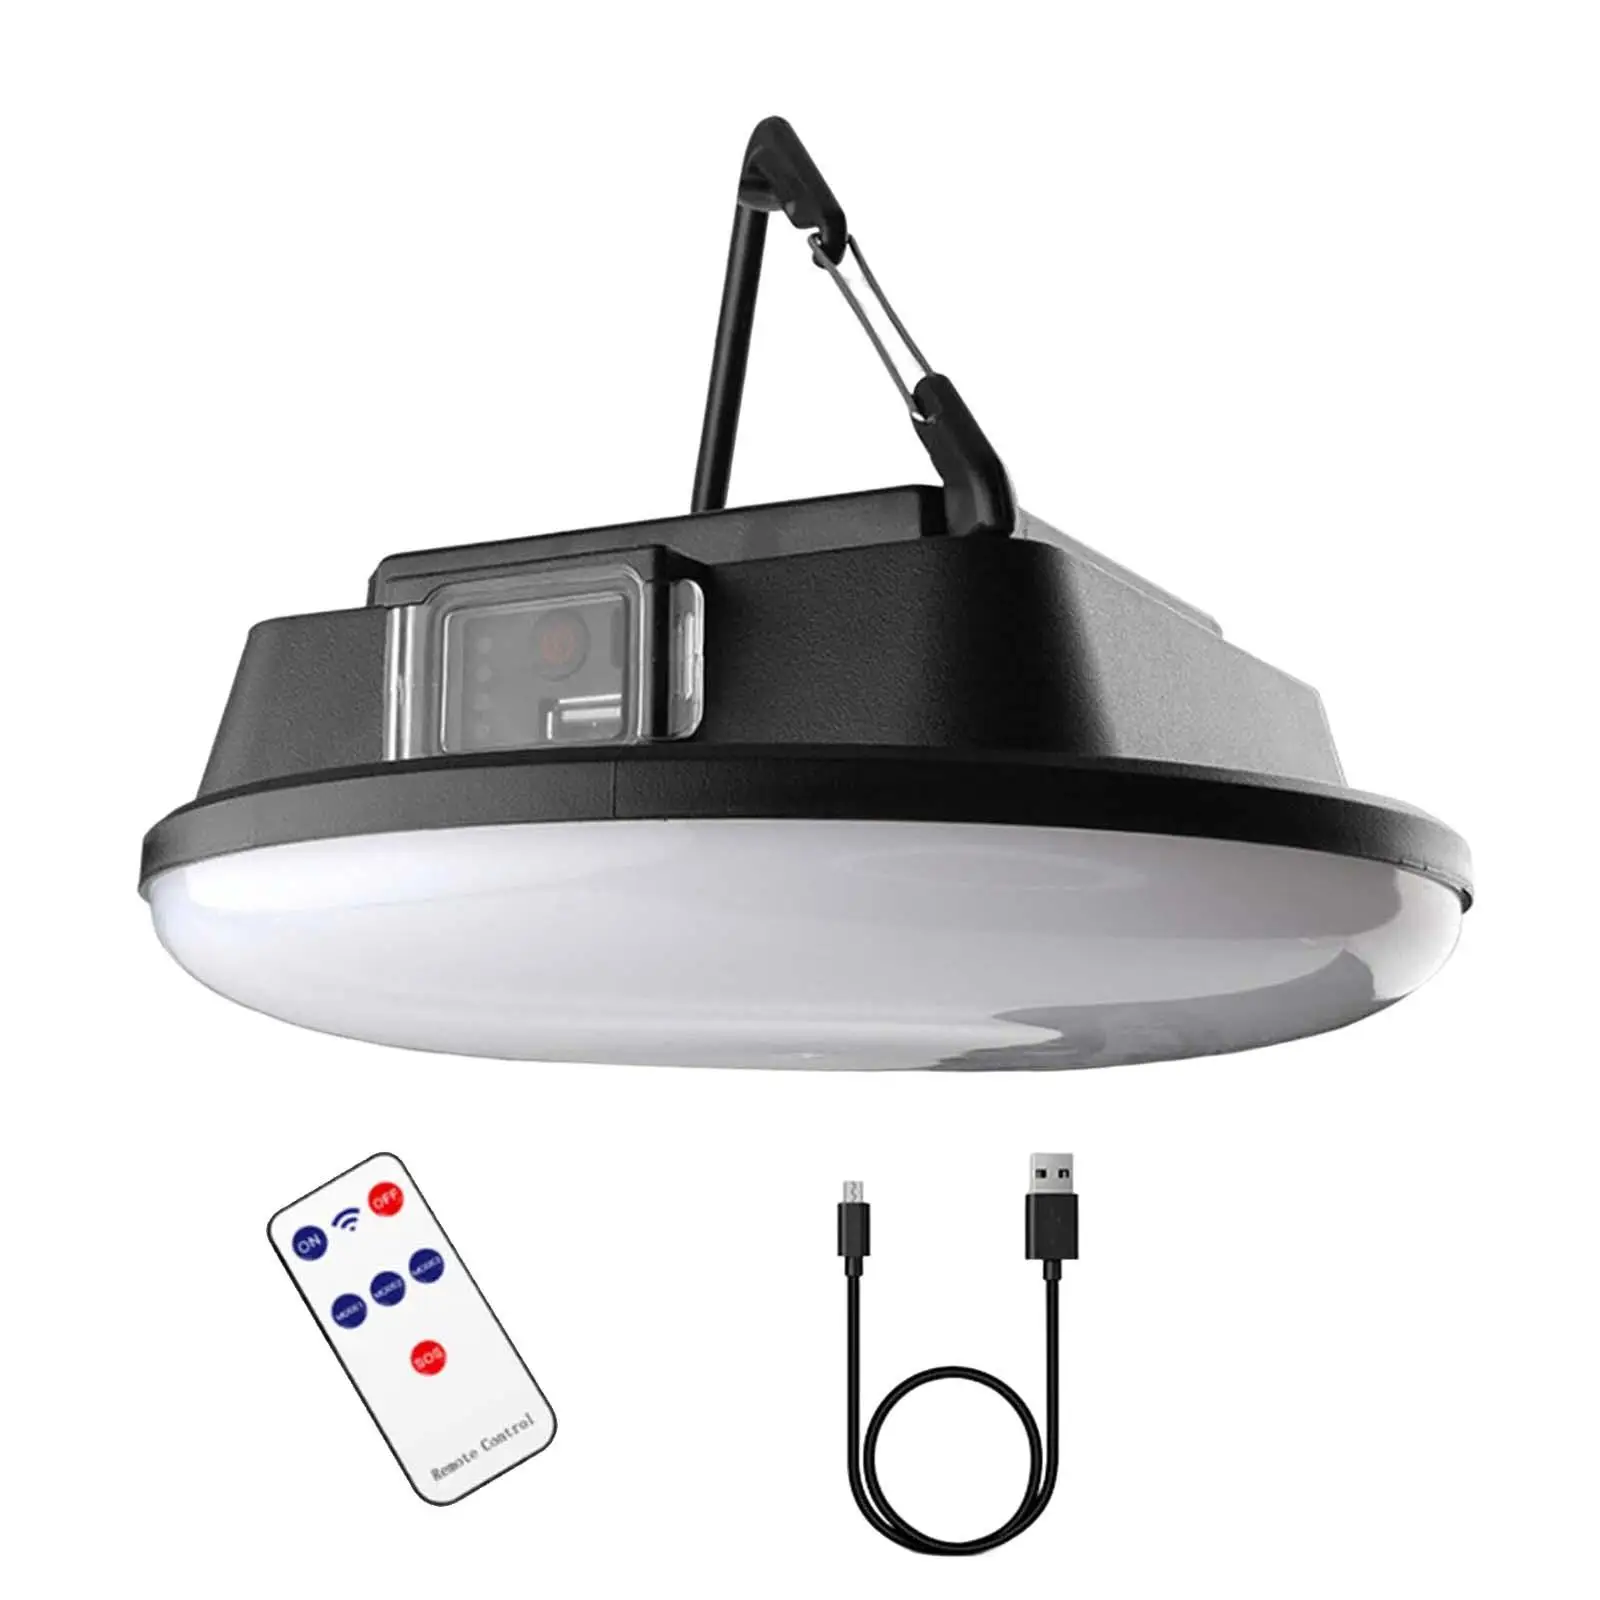 Solar Powered Camping Lantern Adjustable Lights USB Input Output Remote Control